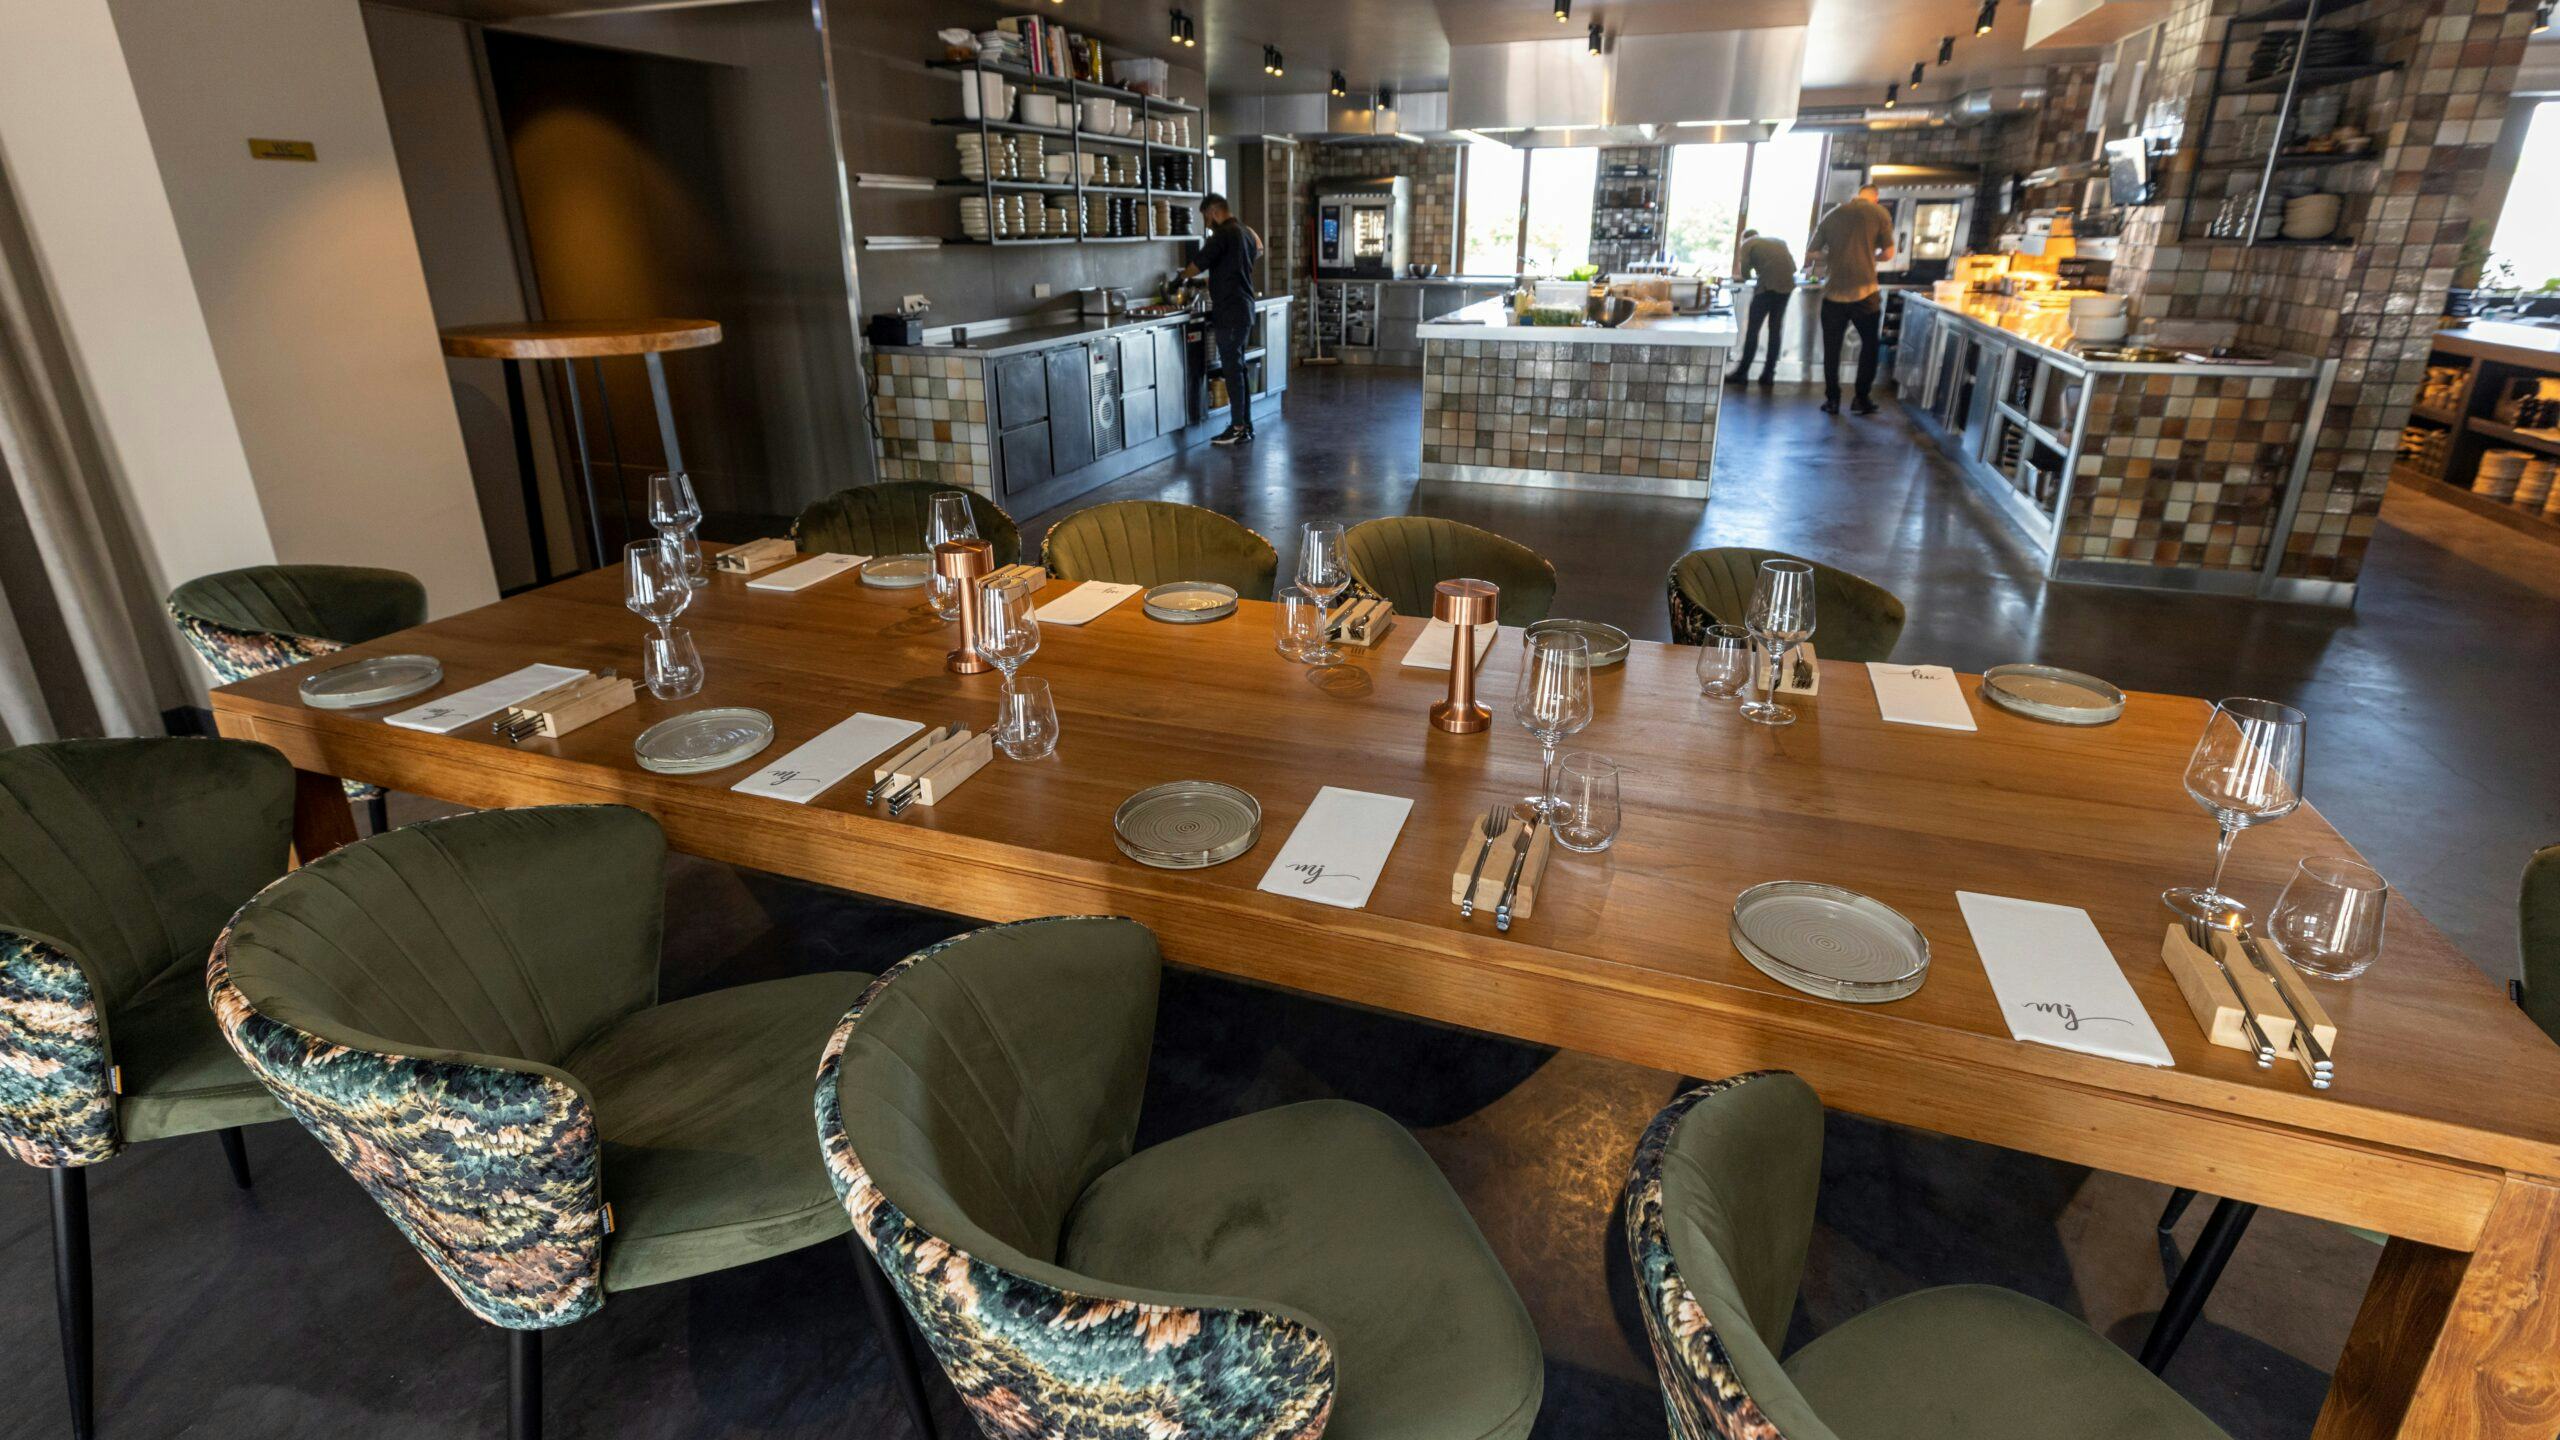 Chefs table van MJ Cafe in Lelystad. (meer beeld in het artikel)